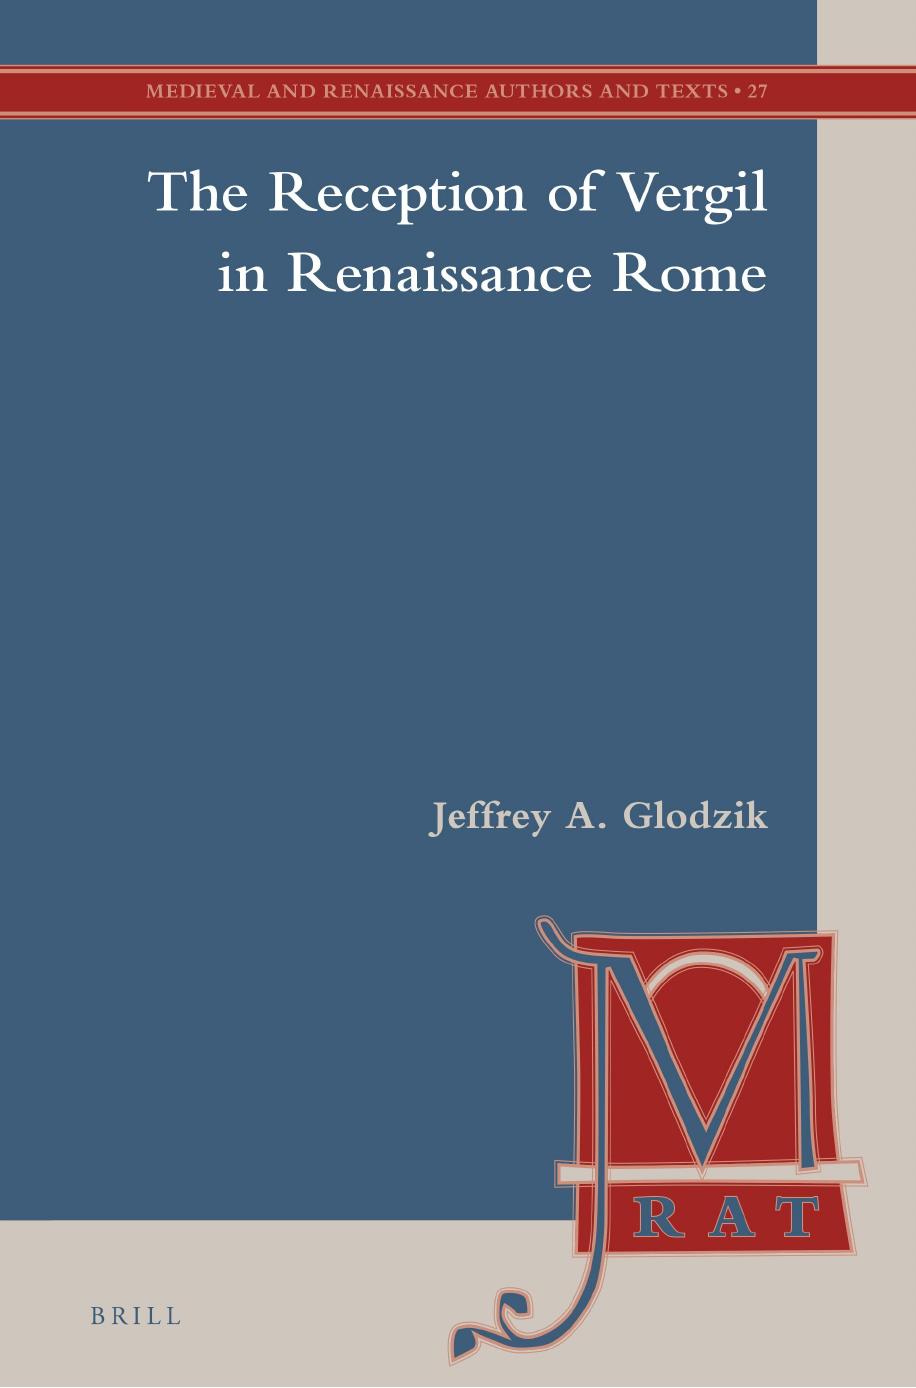 The Reception of Vergil in Renaissance Rome by Jeffrey A. Glodzik